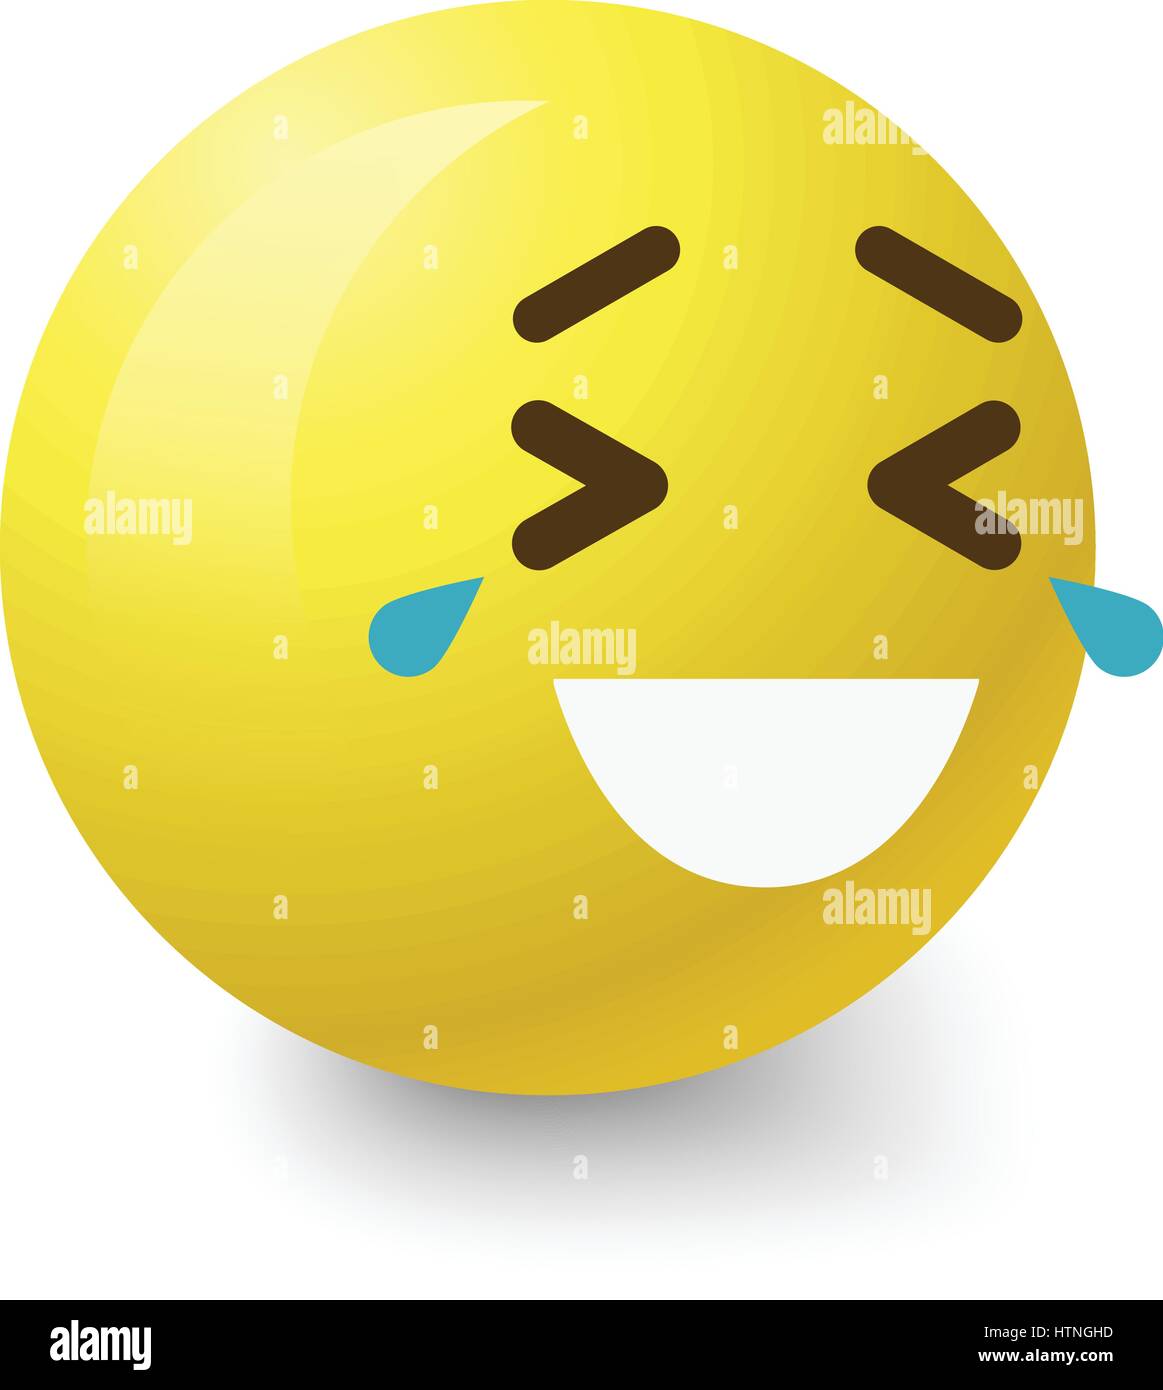 Rire aux larmes icône smiley. Cartoon illustration de rire aux larmes smiley icône vecteur pour le web Illustration de Vecteur